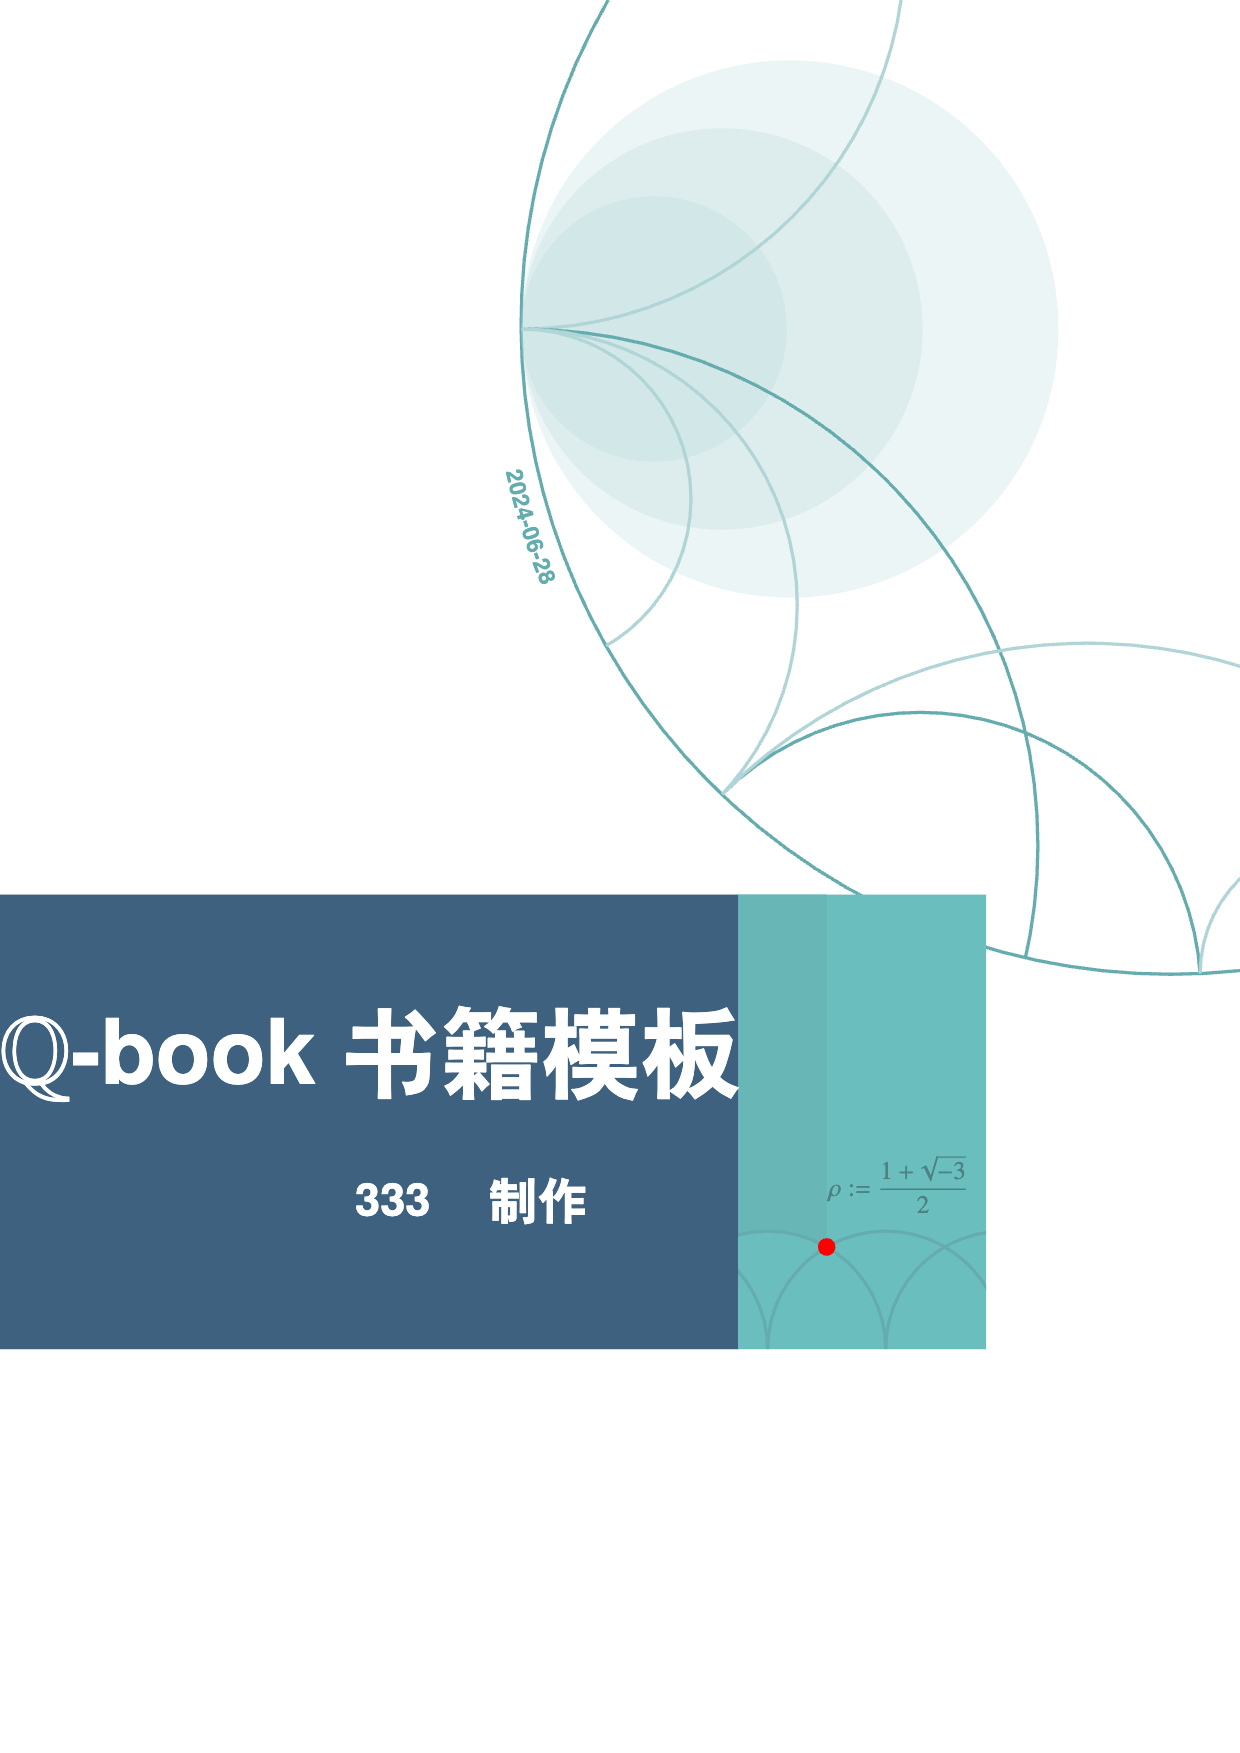 Q-book LaTeX 书籍模板